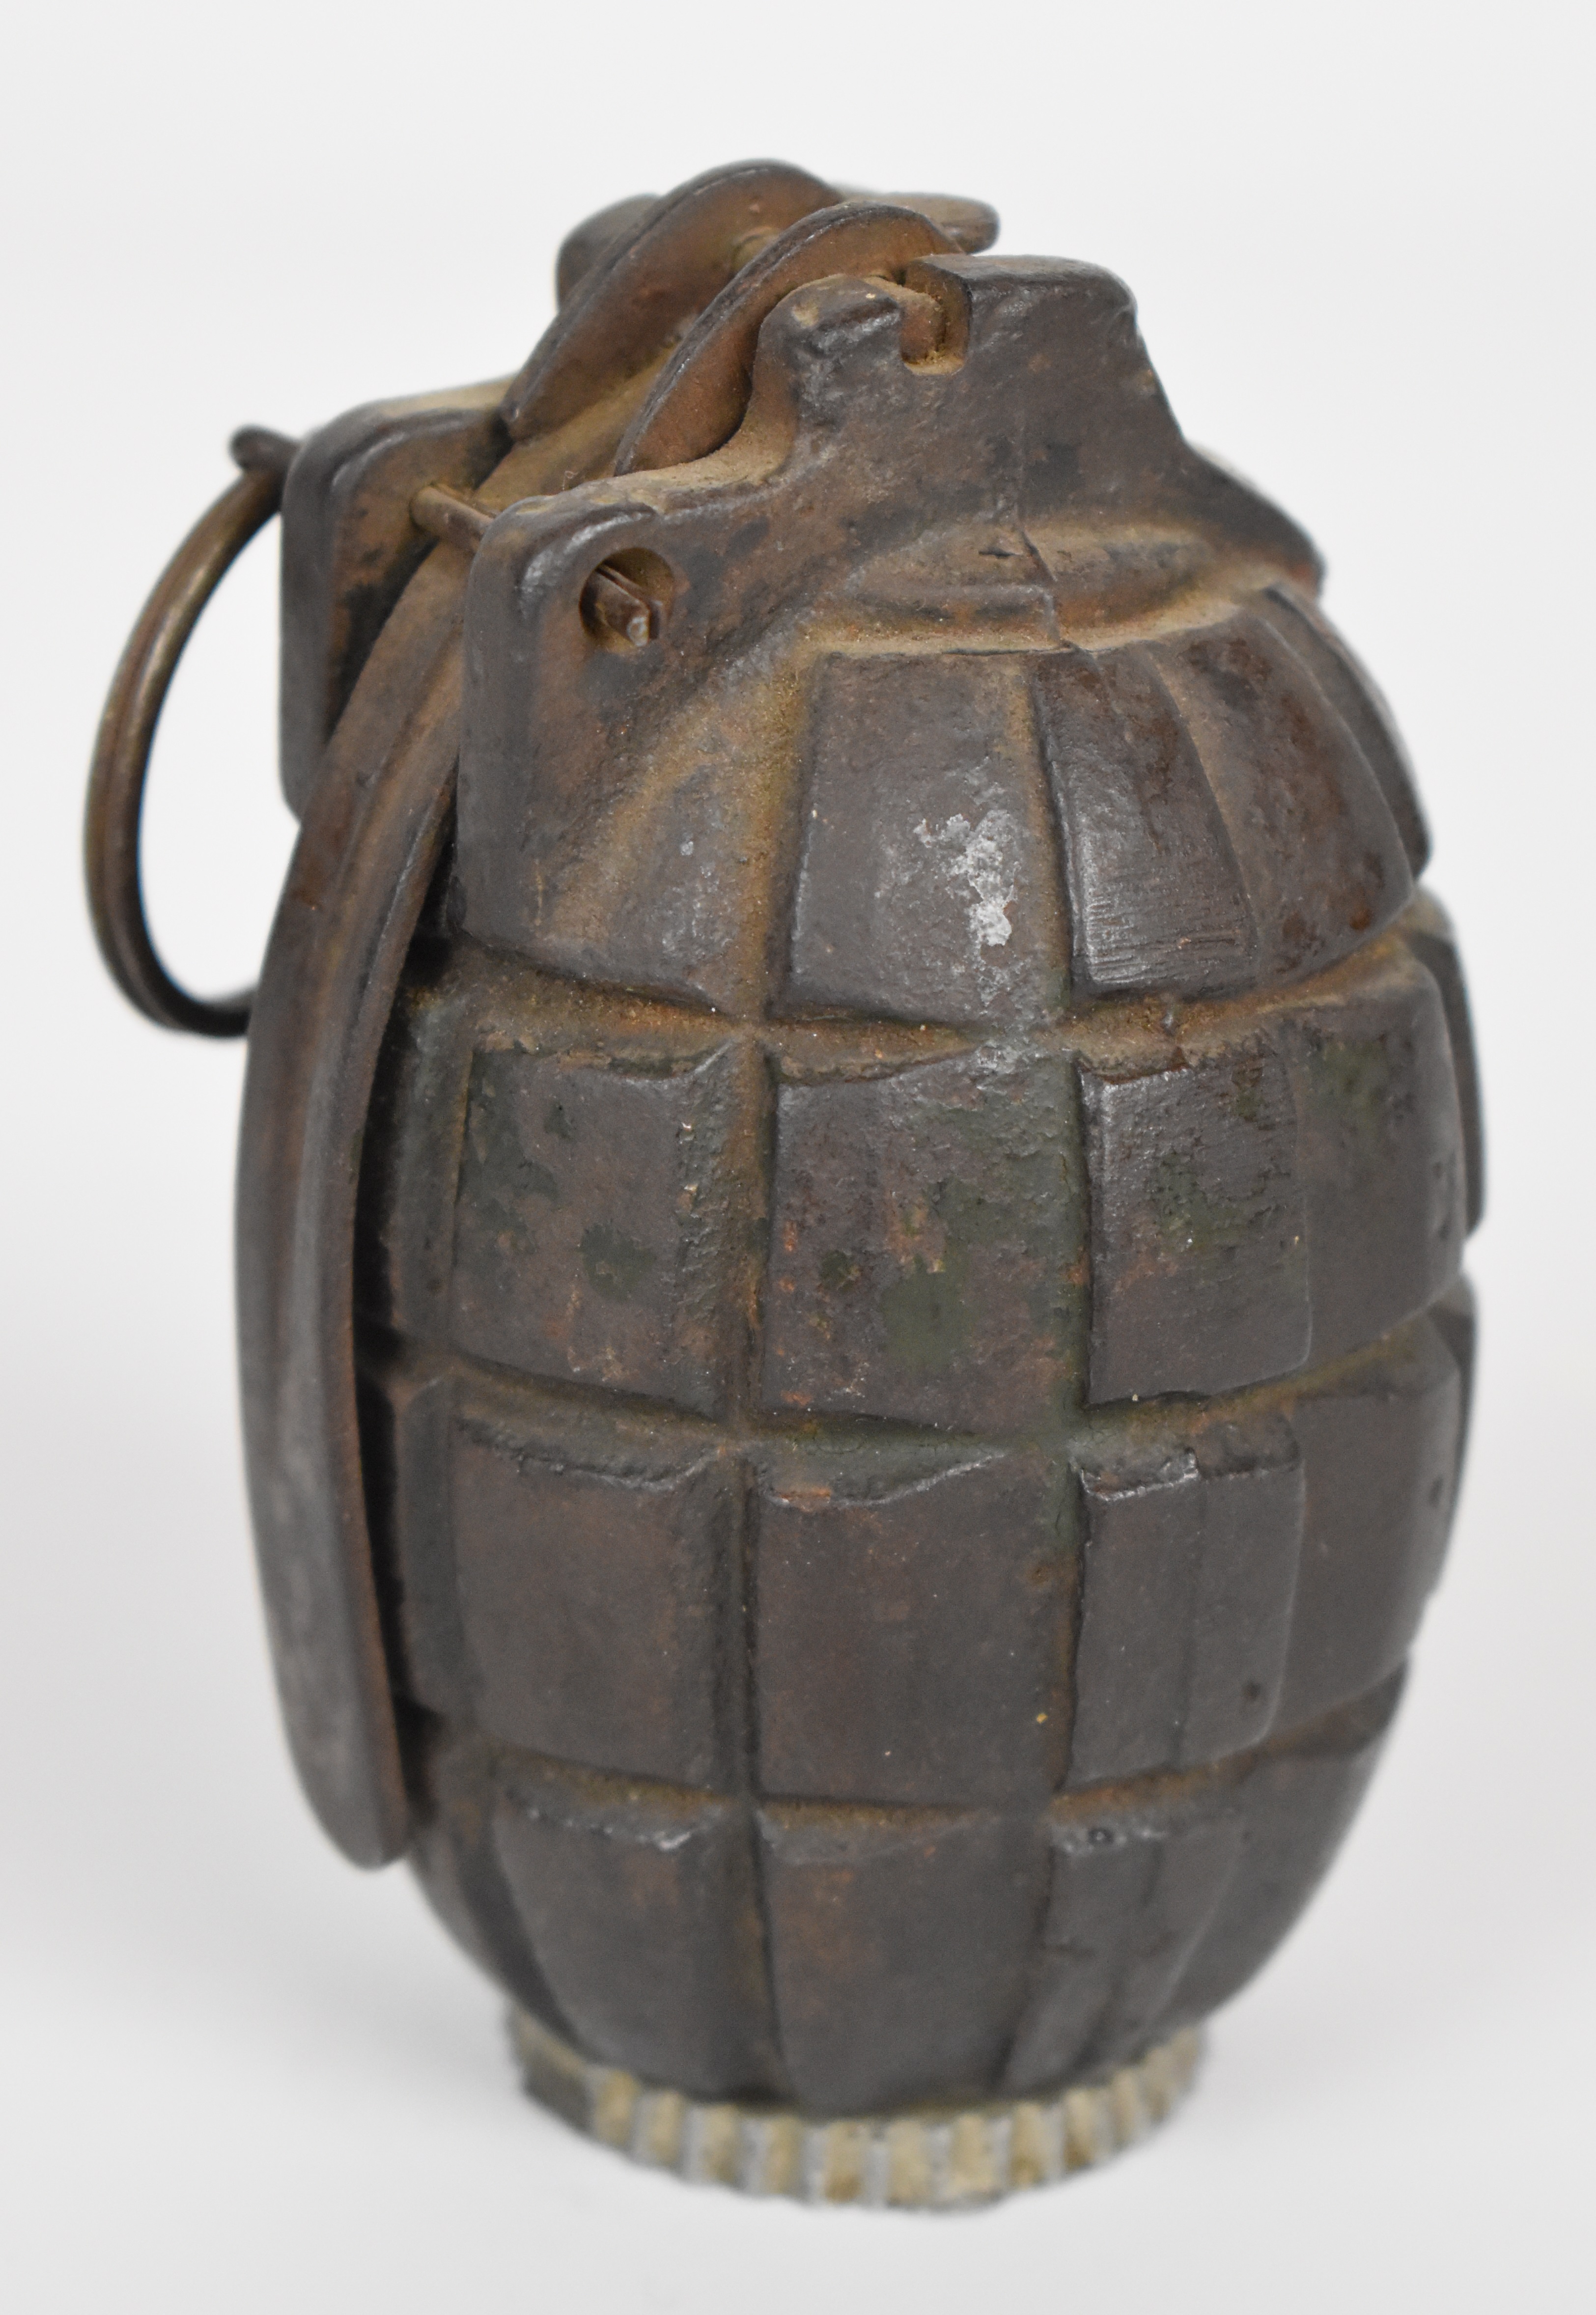 British WW1 inert Mills bomb / hand grenade stamped No 5 MK1, 1916, H & T.V - Image 3 of 3